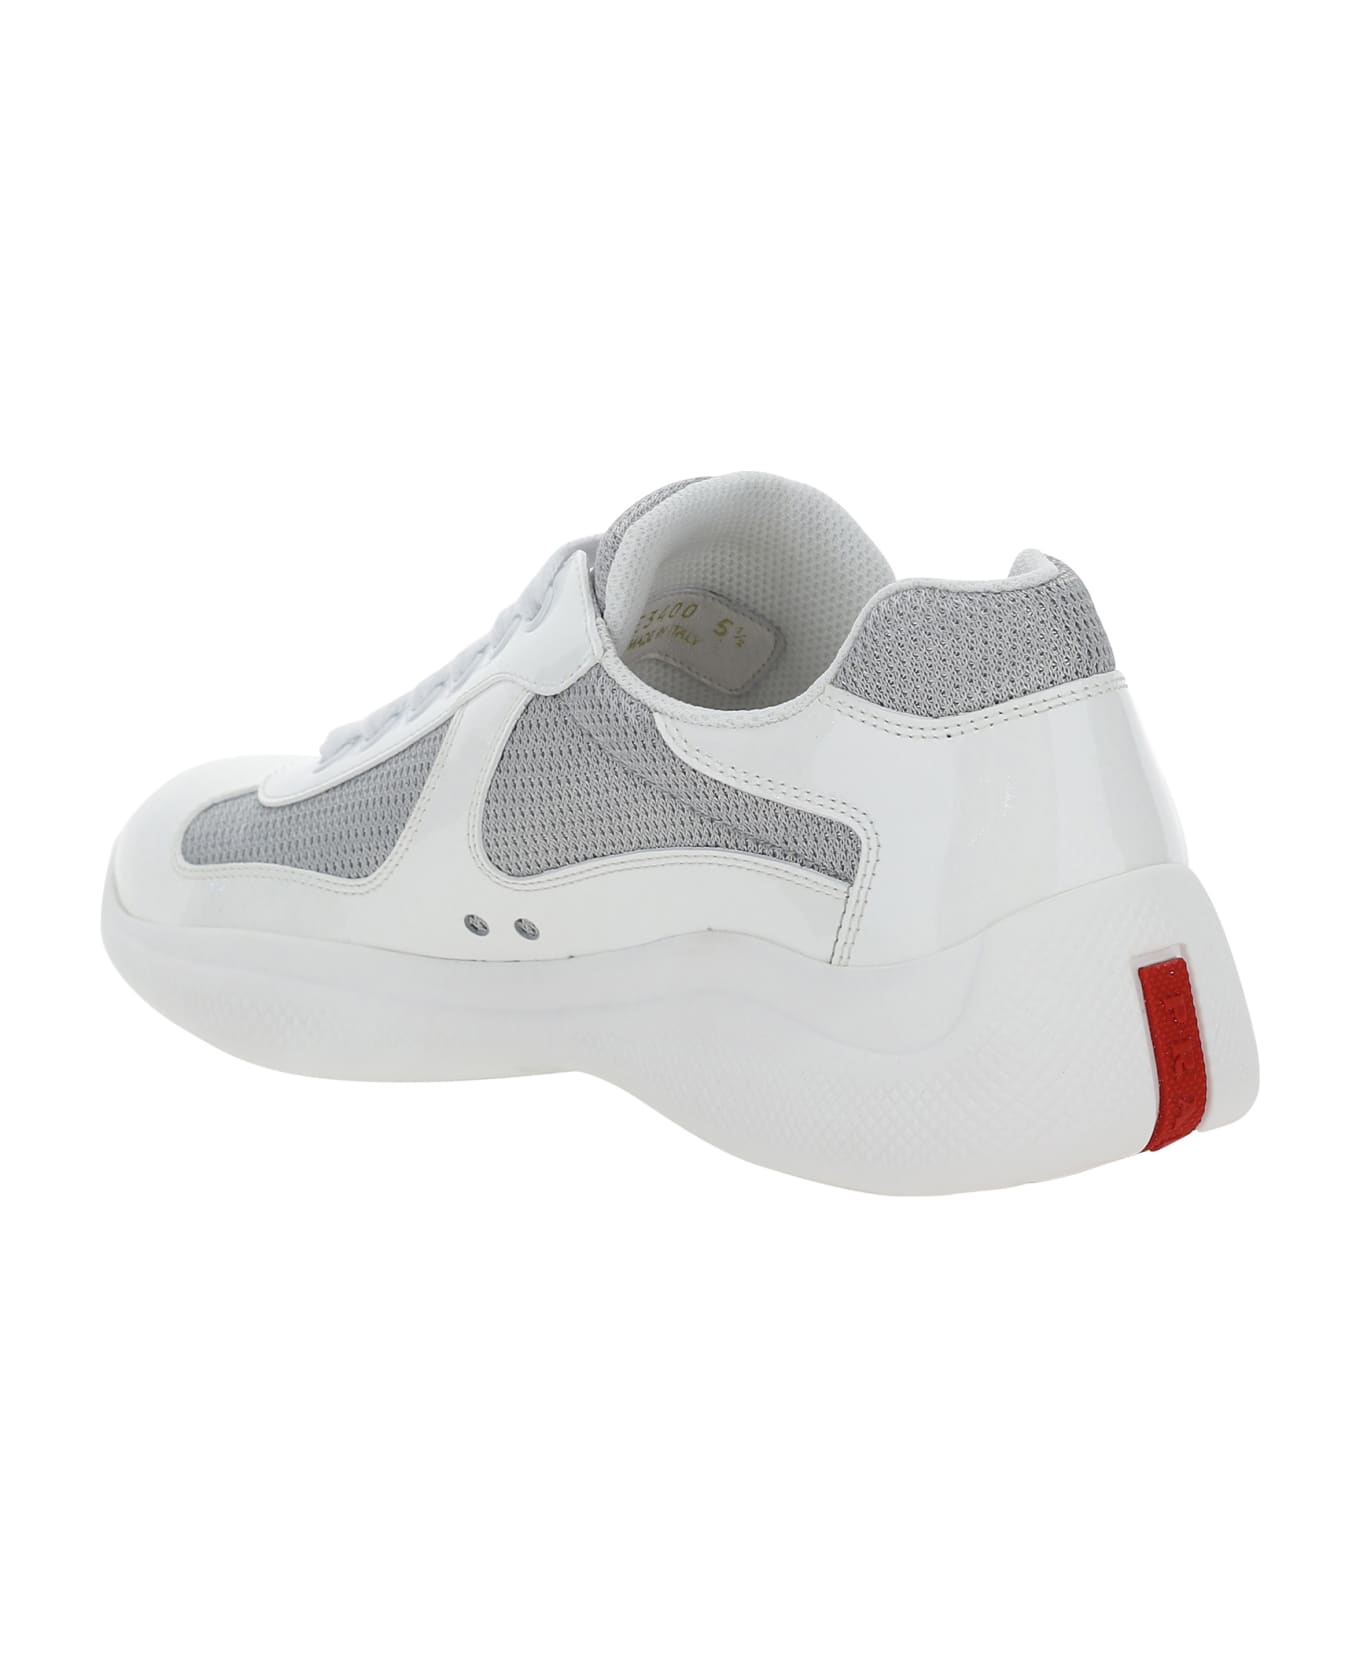 Prada New America's Cup Sneakers - Bianco+argento